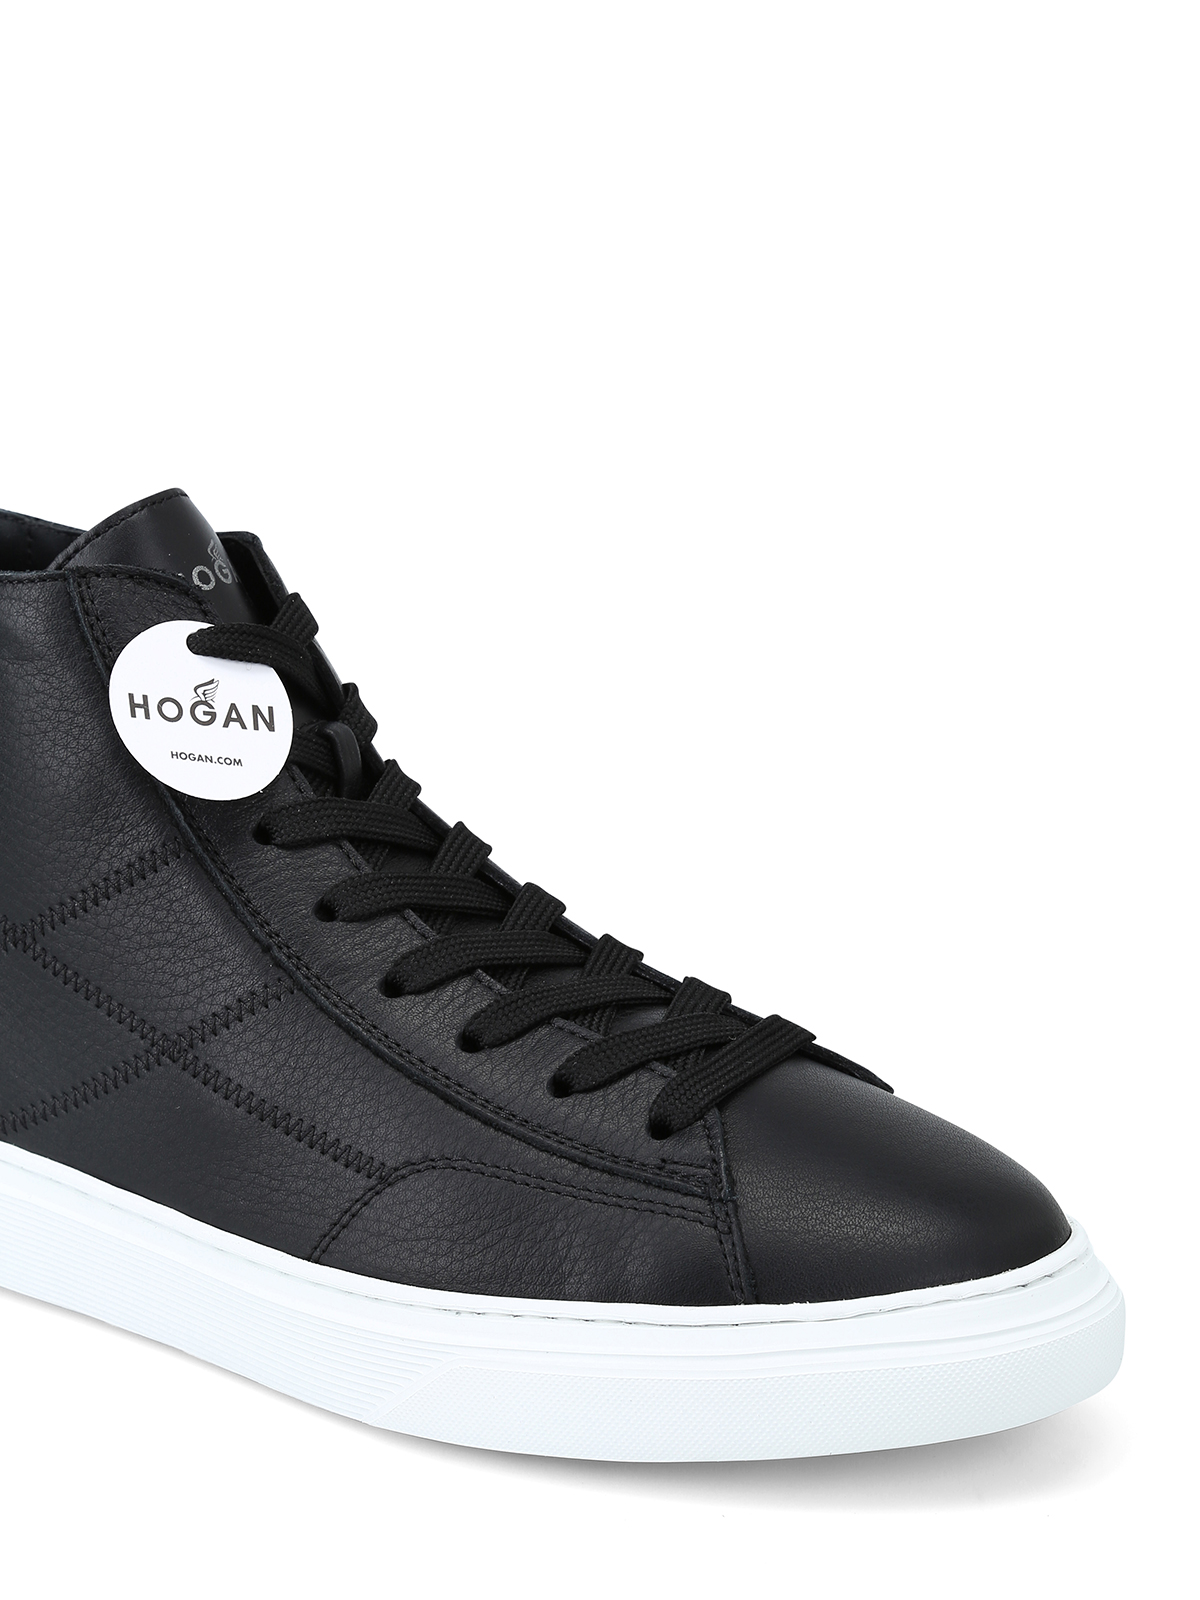 Trainers - H365 black leather hi-top sneakers - HXM3650K702I7M0XCG